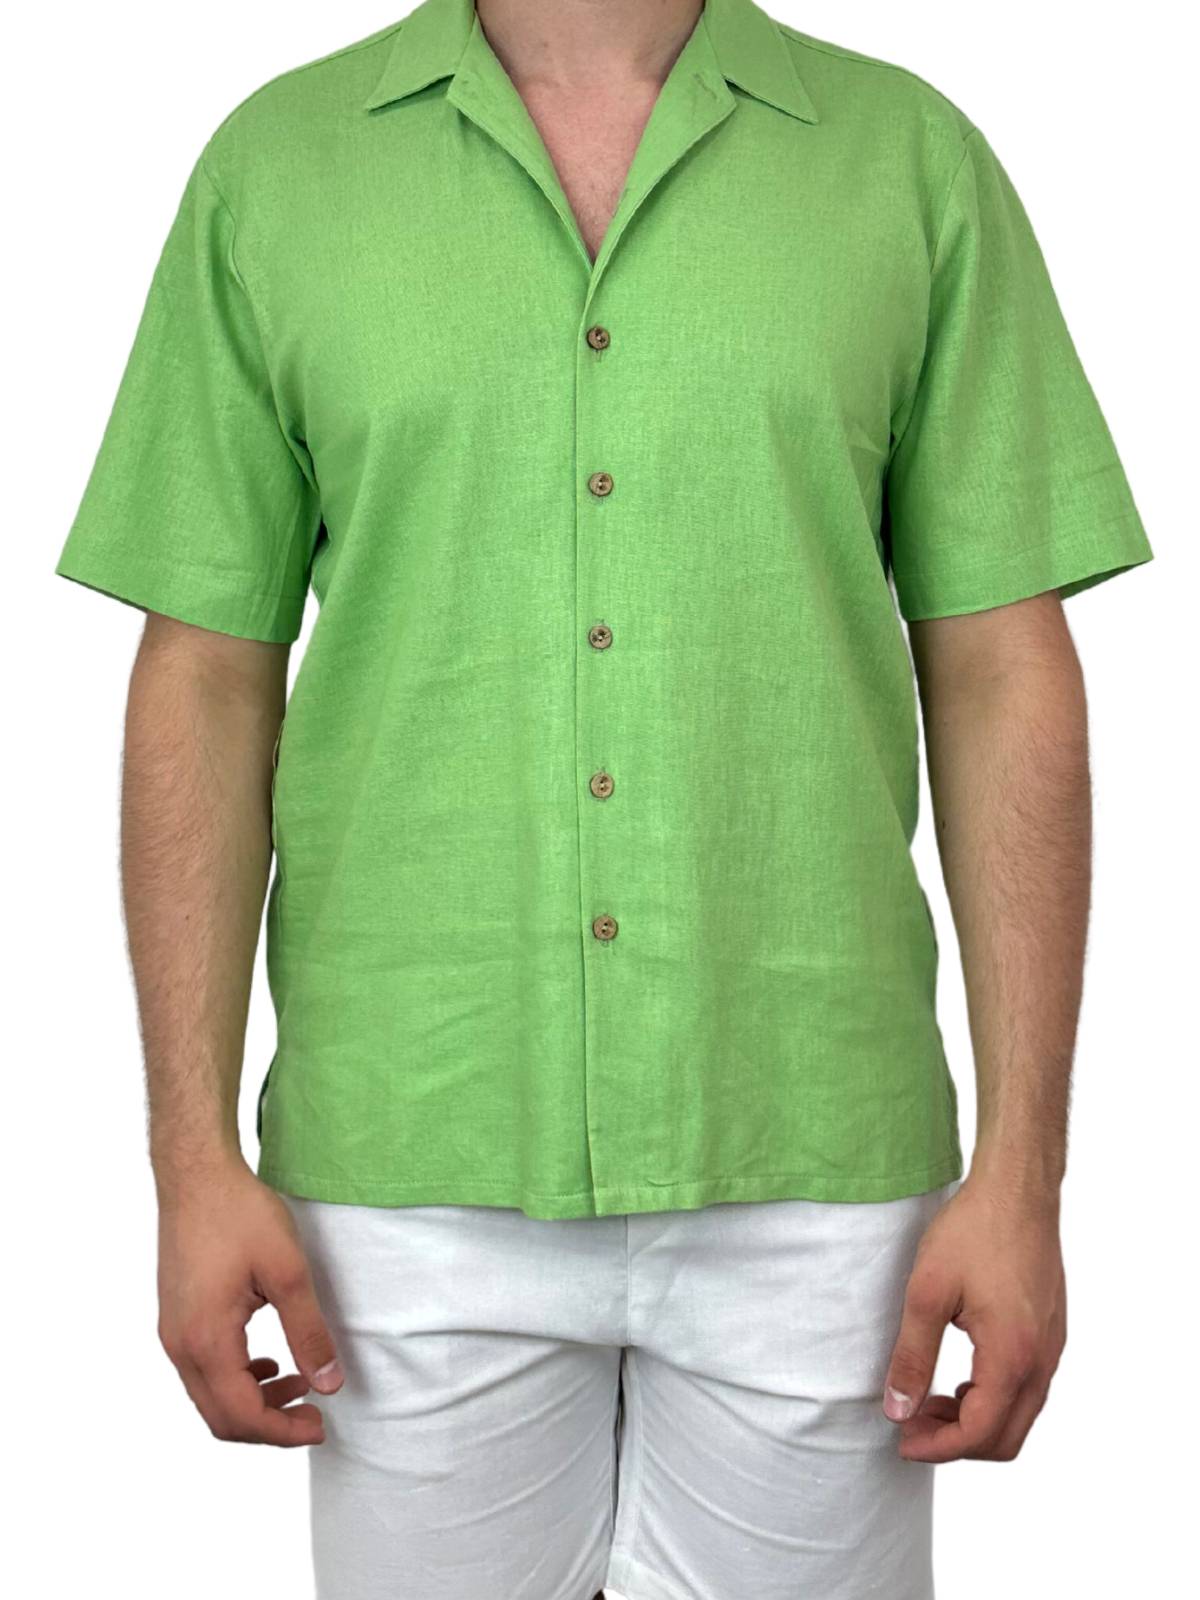 Byron Bay Apple Linen S/S Big Mens Shirt